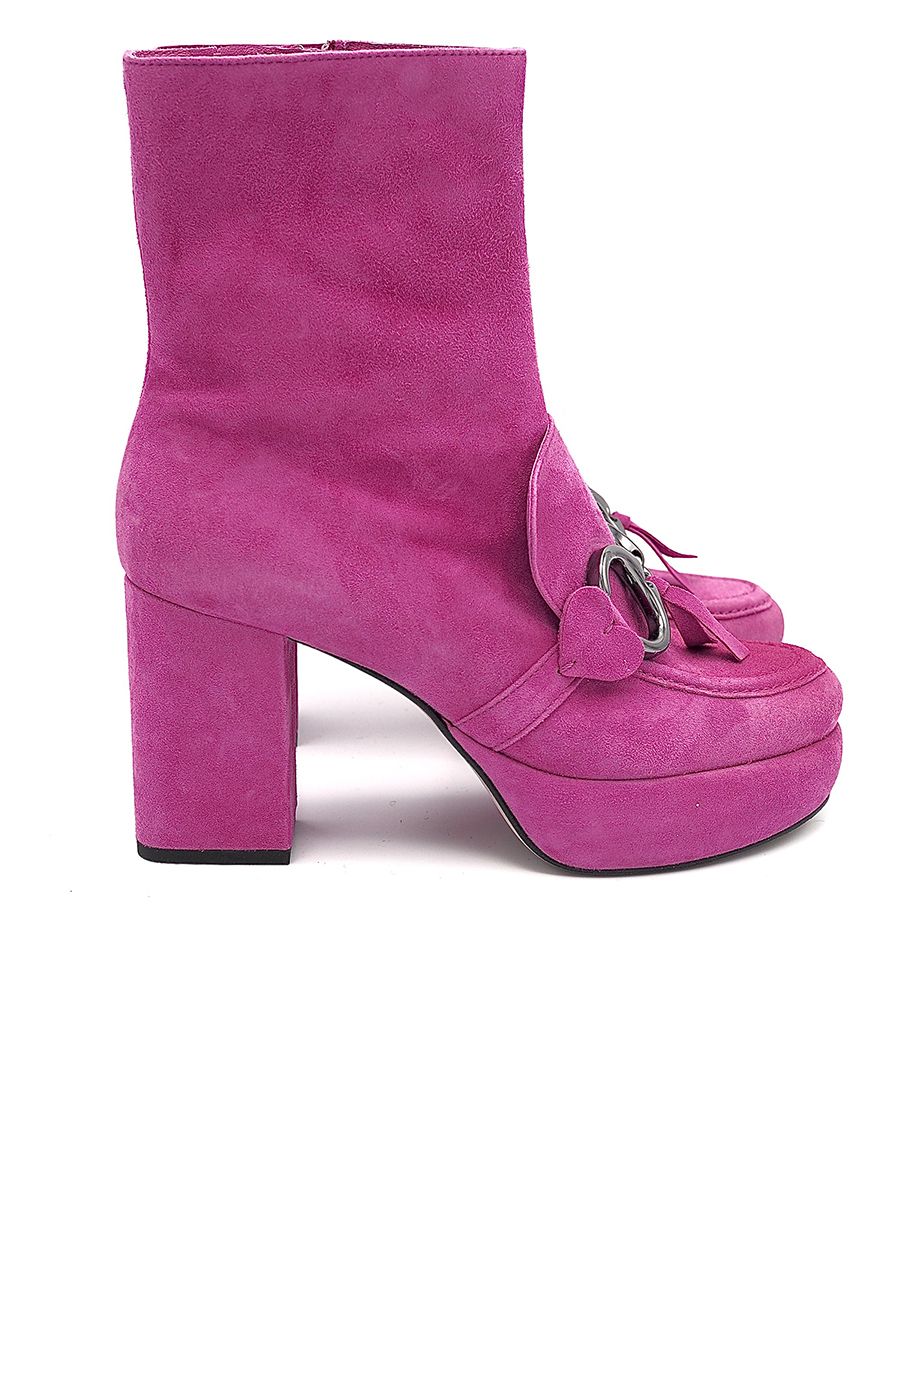 Kennel & Schmenger boots Rose femmes (vintage '70 semelle plateau - 57120 boots rose vintage ) - Marine | Much more than shoes